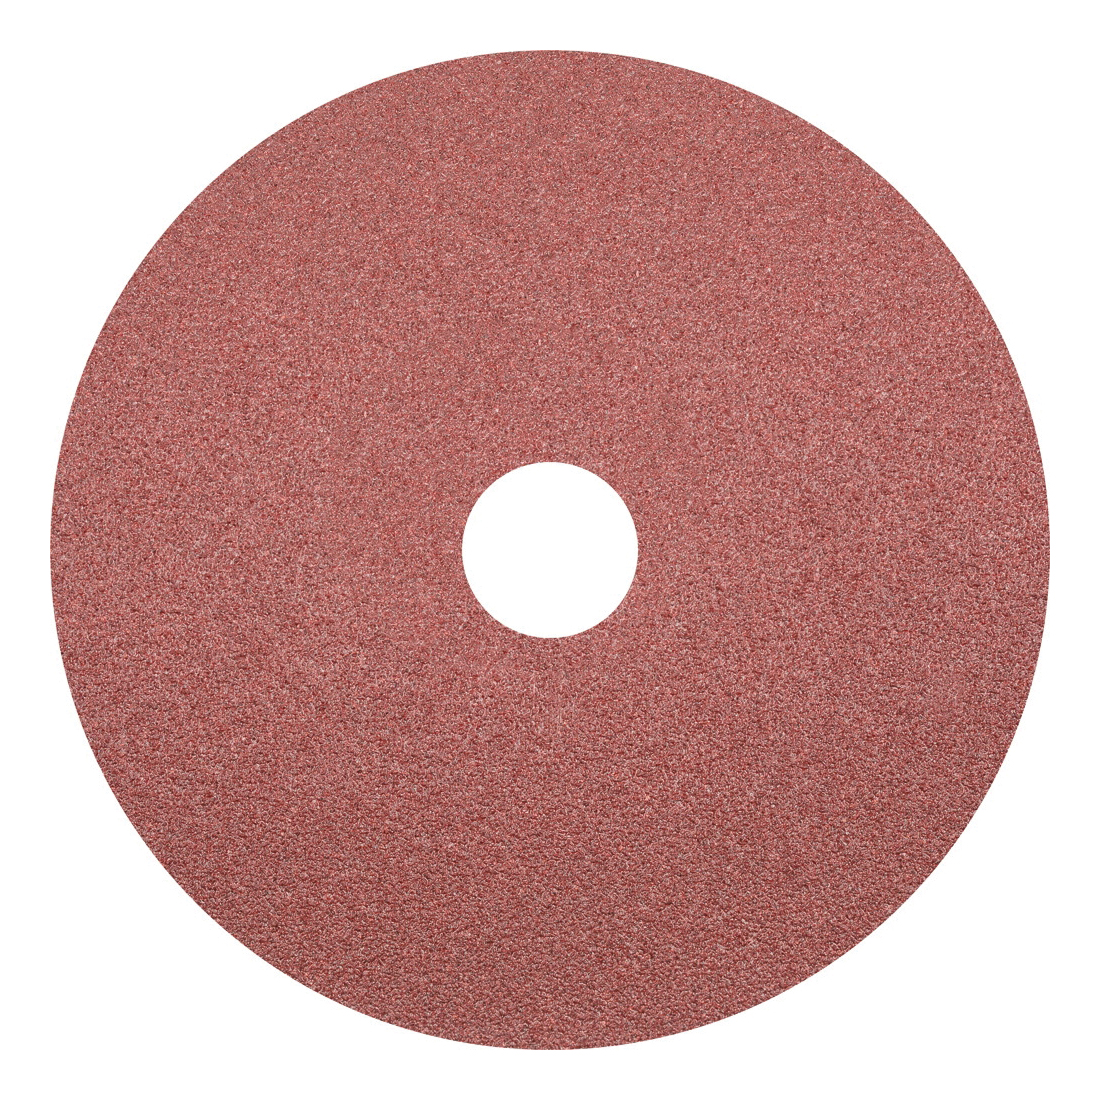 PFERD 62505 Standard FS Coated Abrasive Flap Disc, 5 in Dia, 7/8 in Center Hole, 60 Grit, Aluminum Oxide Abrasive